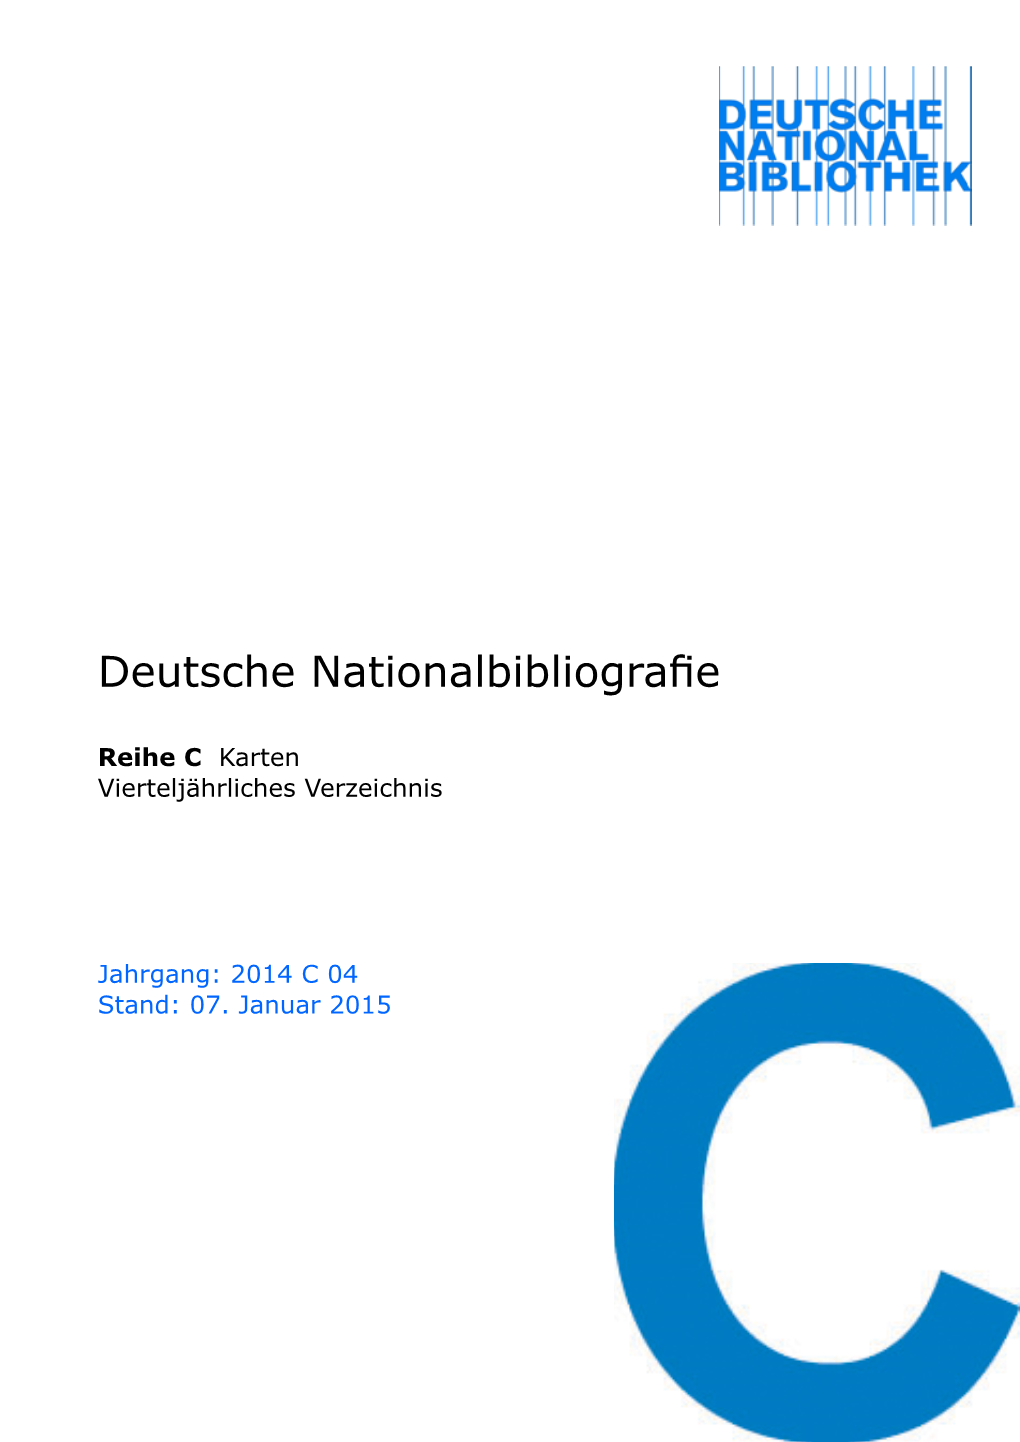 Deutsche Nationalbibliografie 2014 C 04